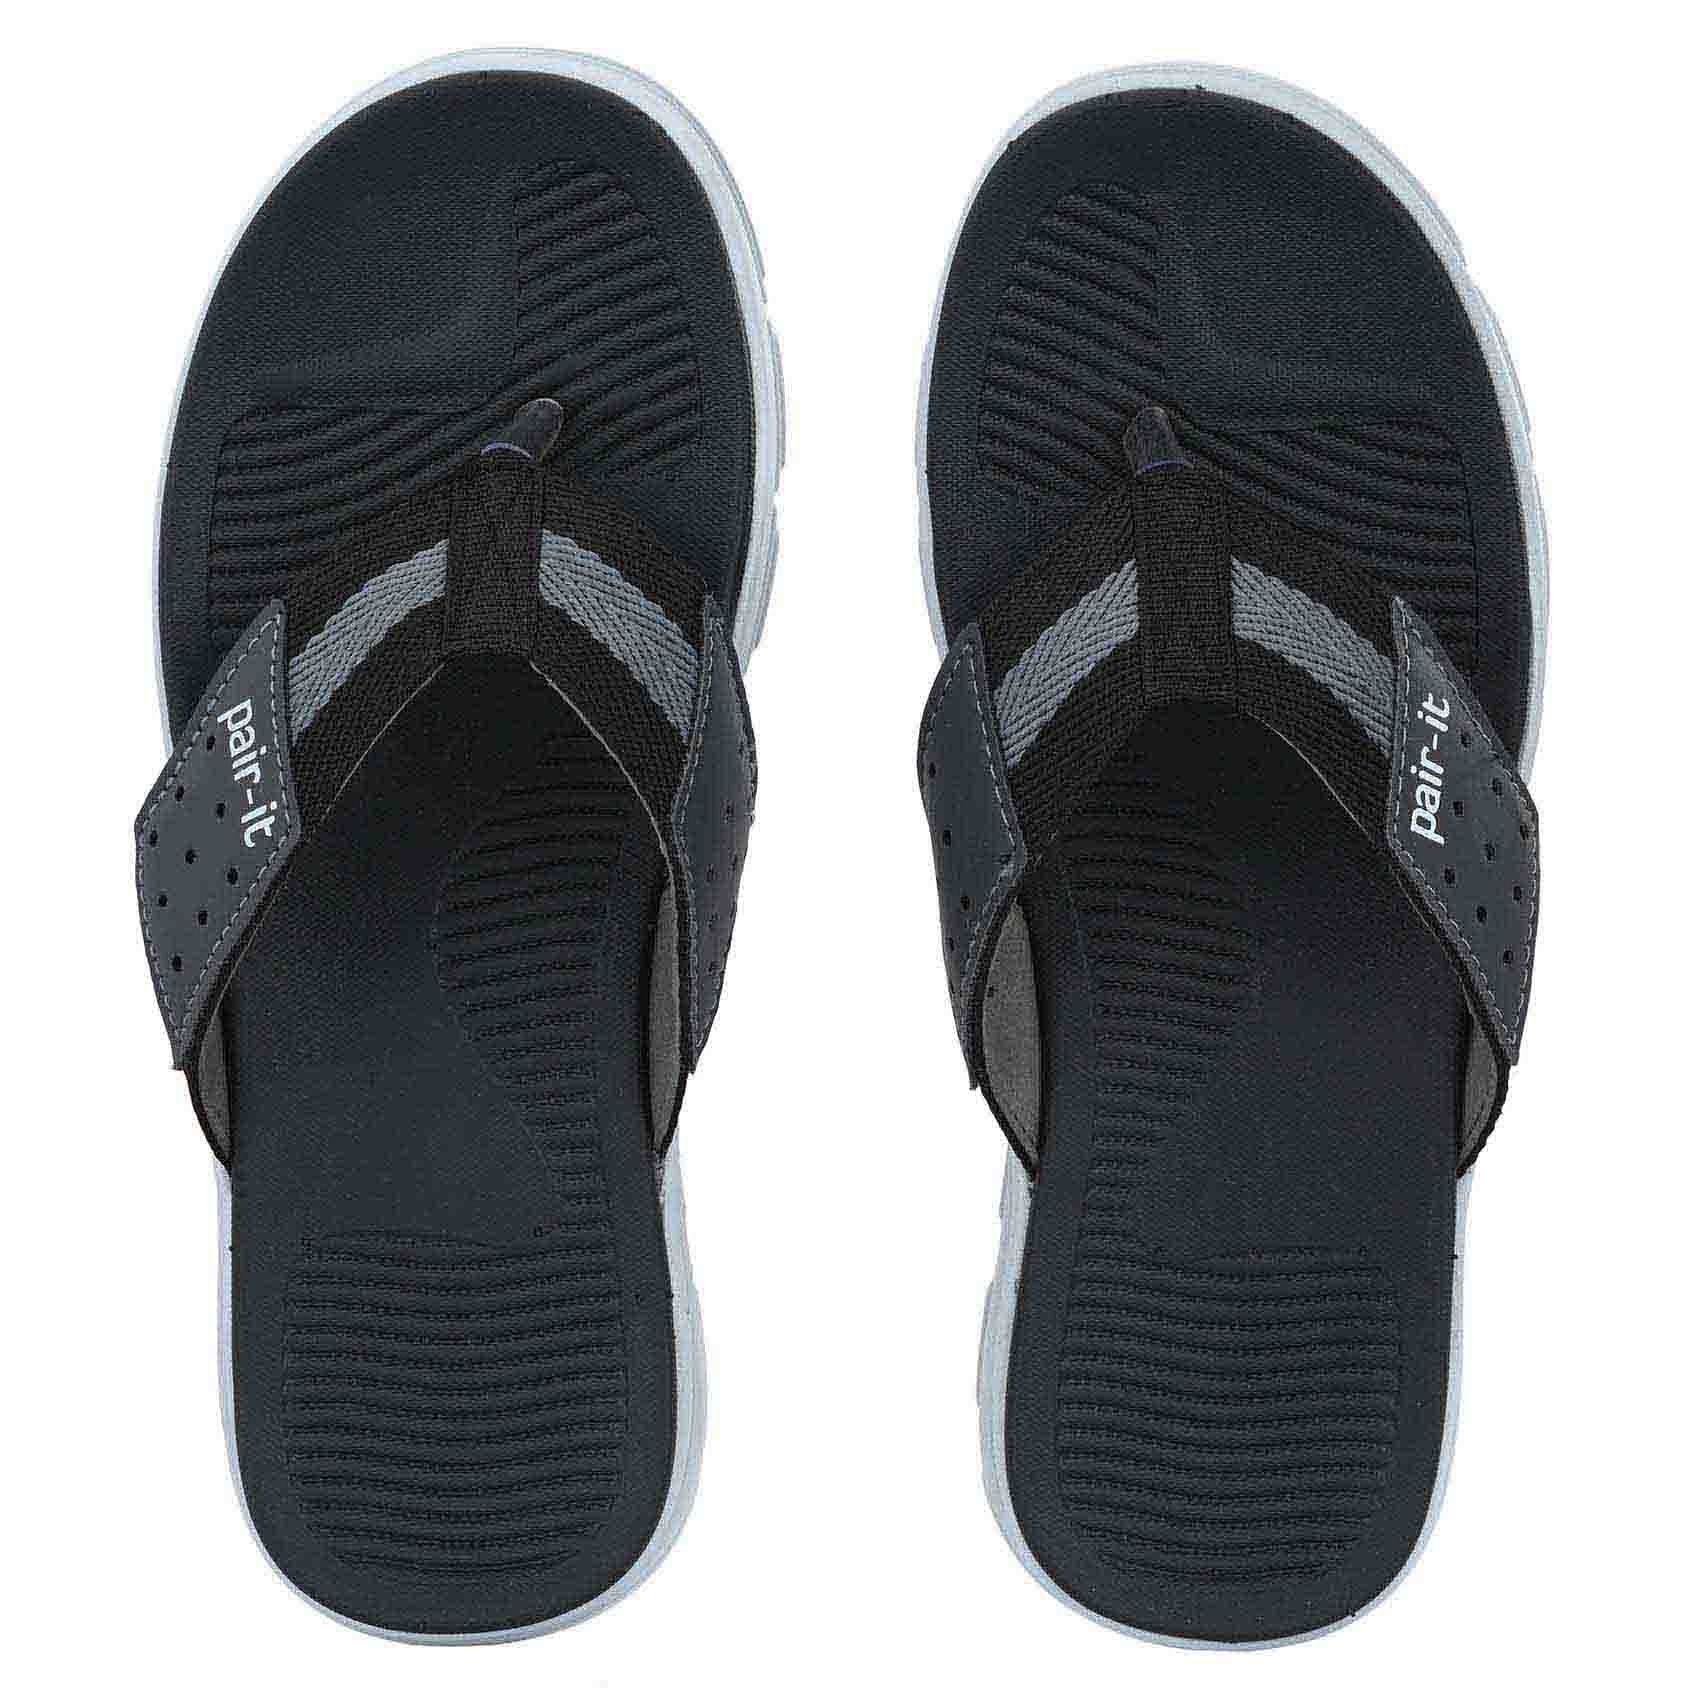 Pair-it Men's Rubberised EVA Slippers-LZ-Slippers117-Black/Grey